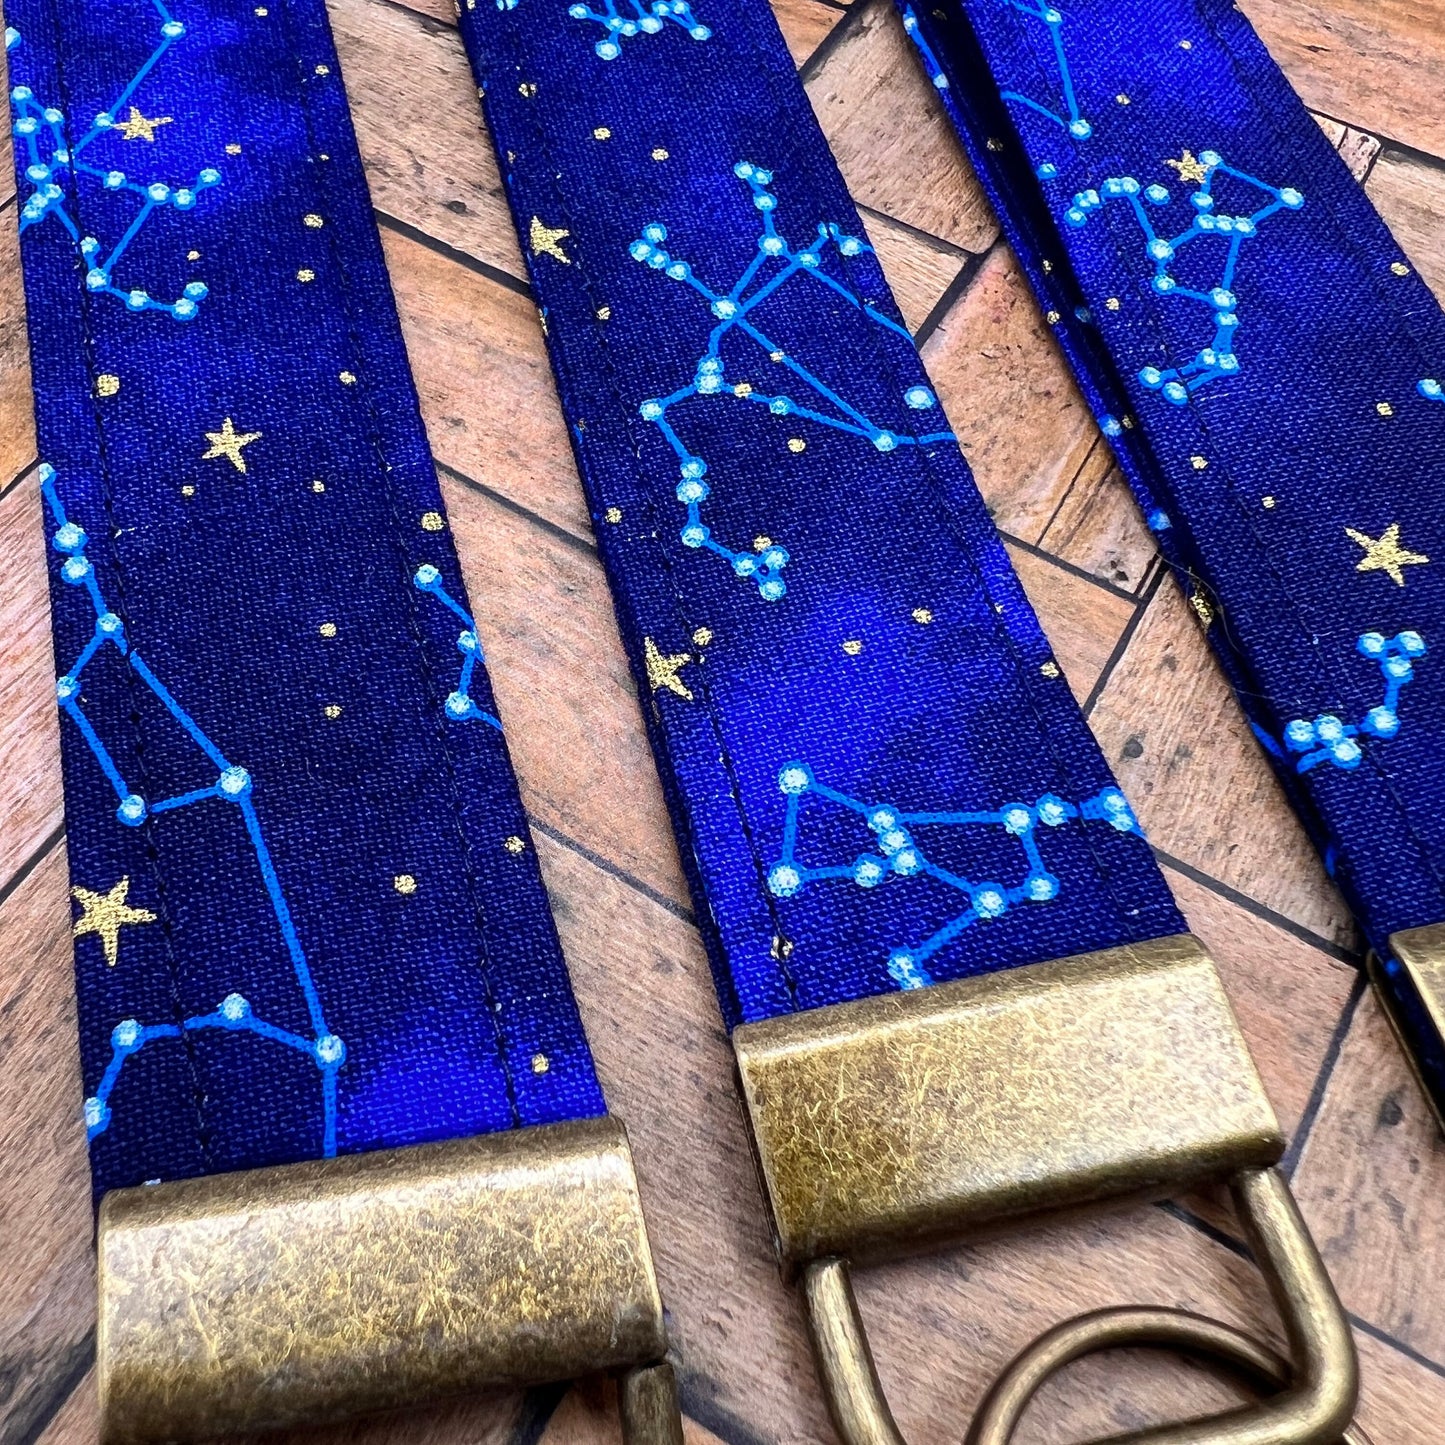 Handmade    Celestial Print  , Space, Stars 6" Fabric Key Fob Keyfob Keychain Wristlet Keys